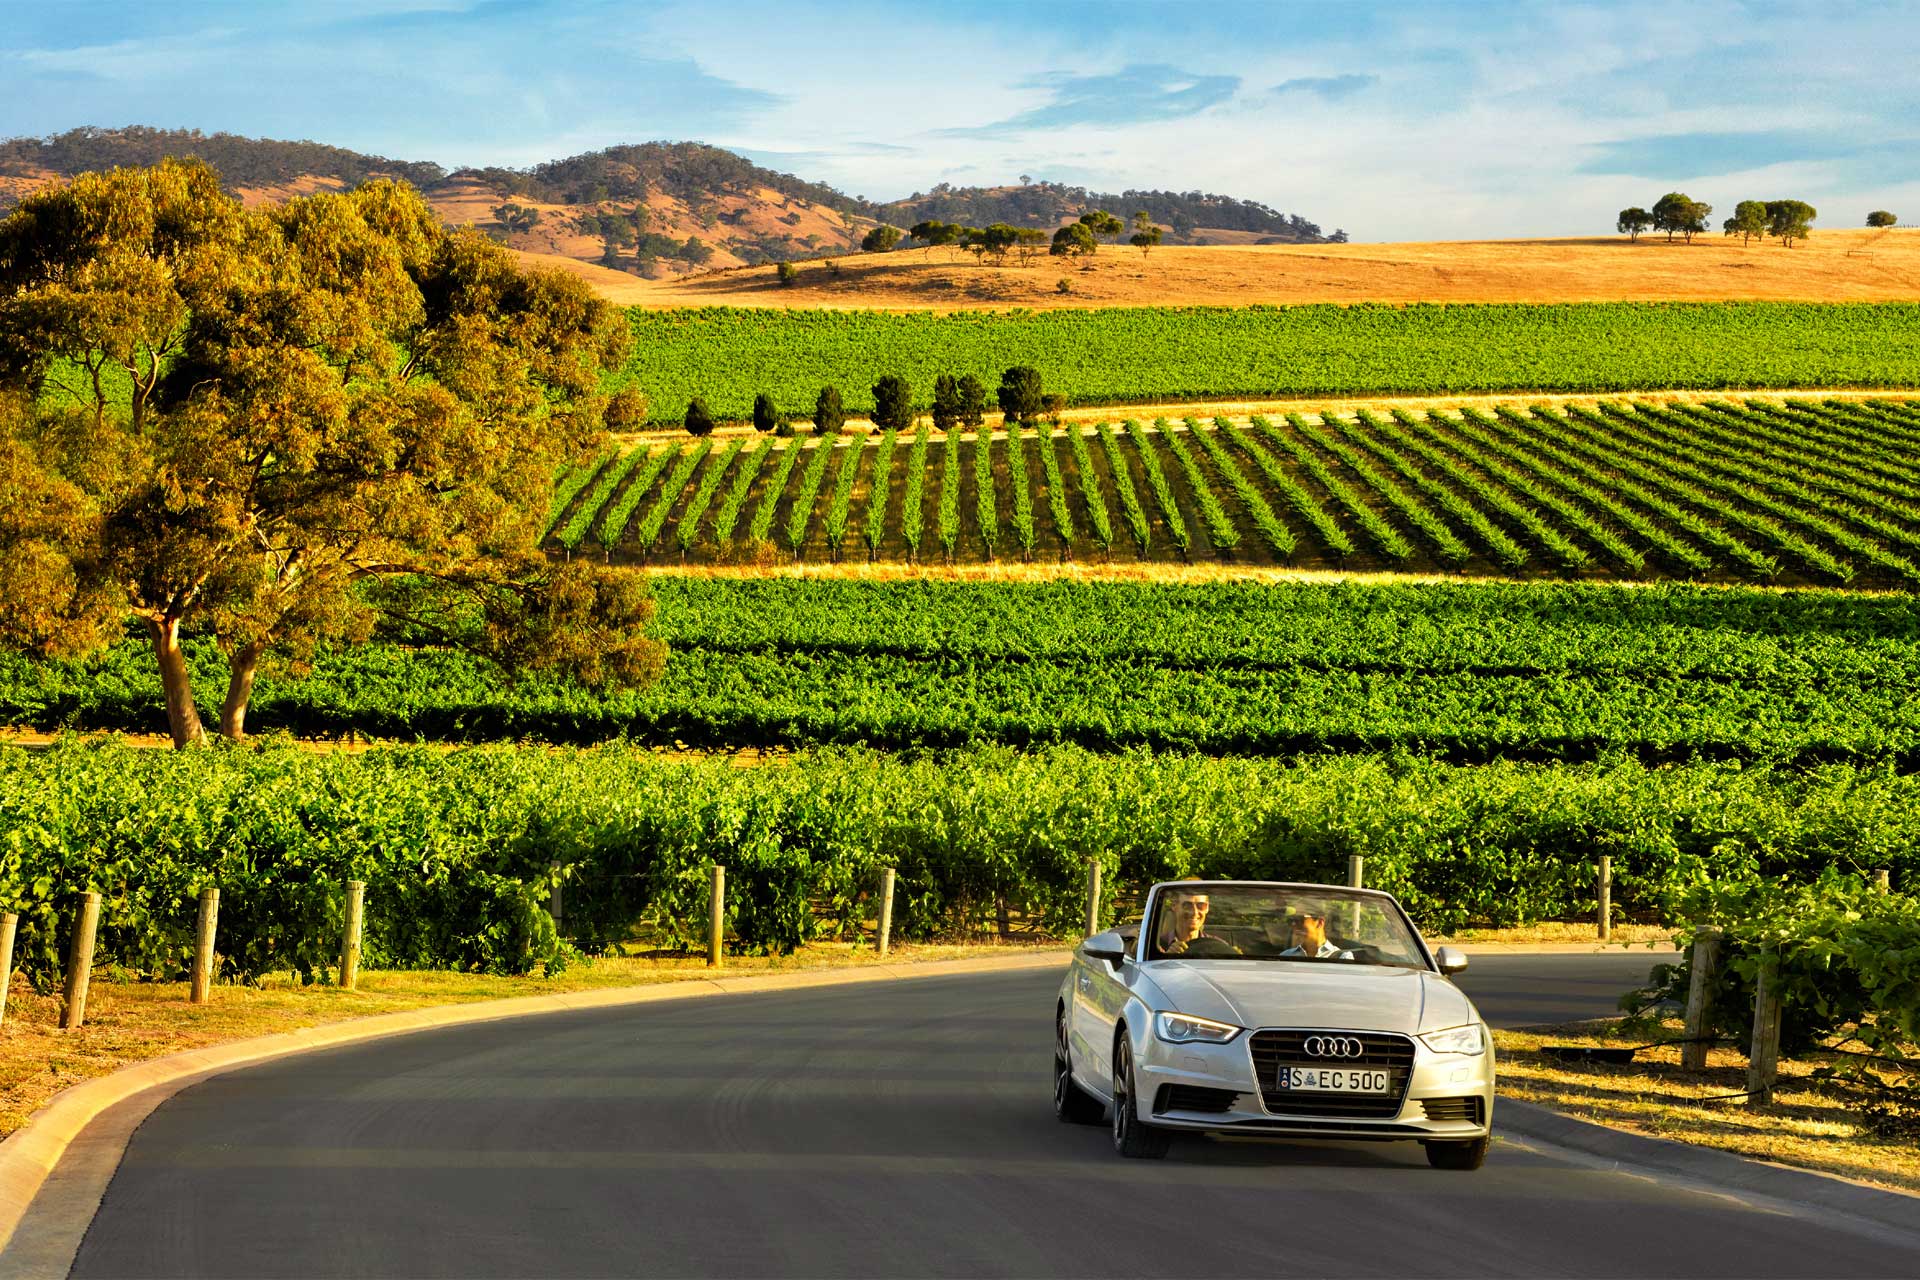 Barossa Valley – A Prominent Wine Region in Australia